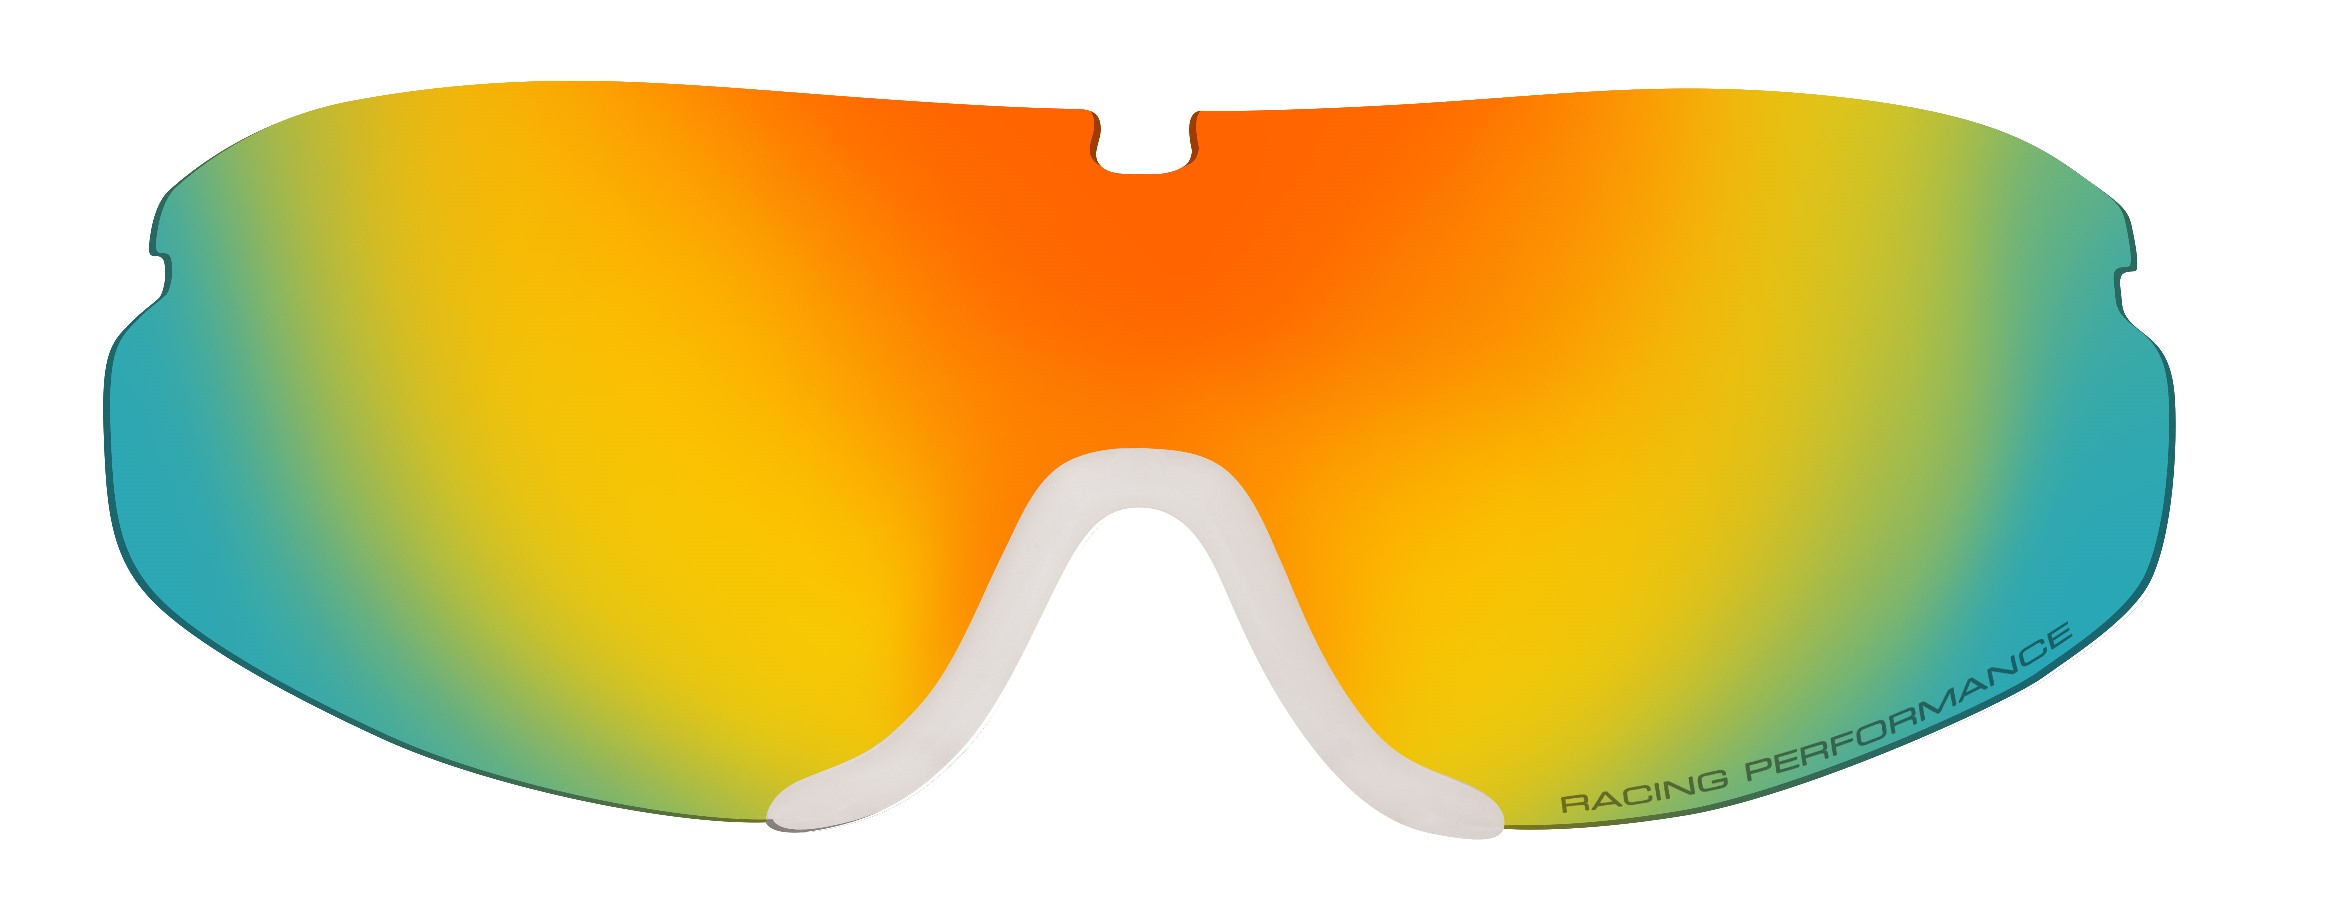 HTGL34/BR Náhradní čočka k lyžařským brýlím CROSS HTG34 hnědá -